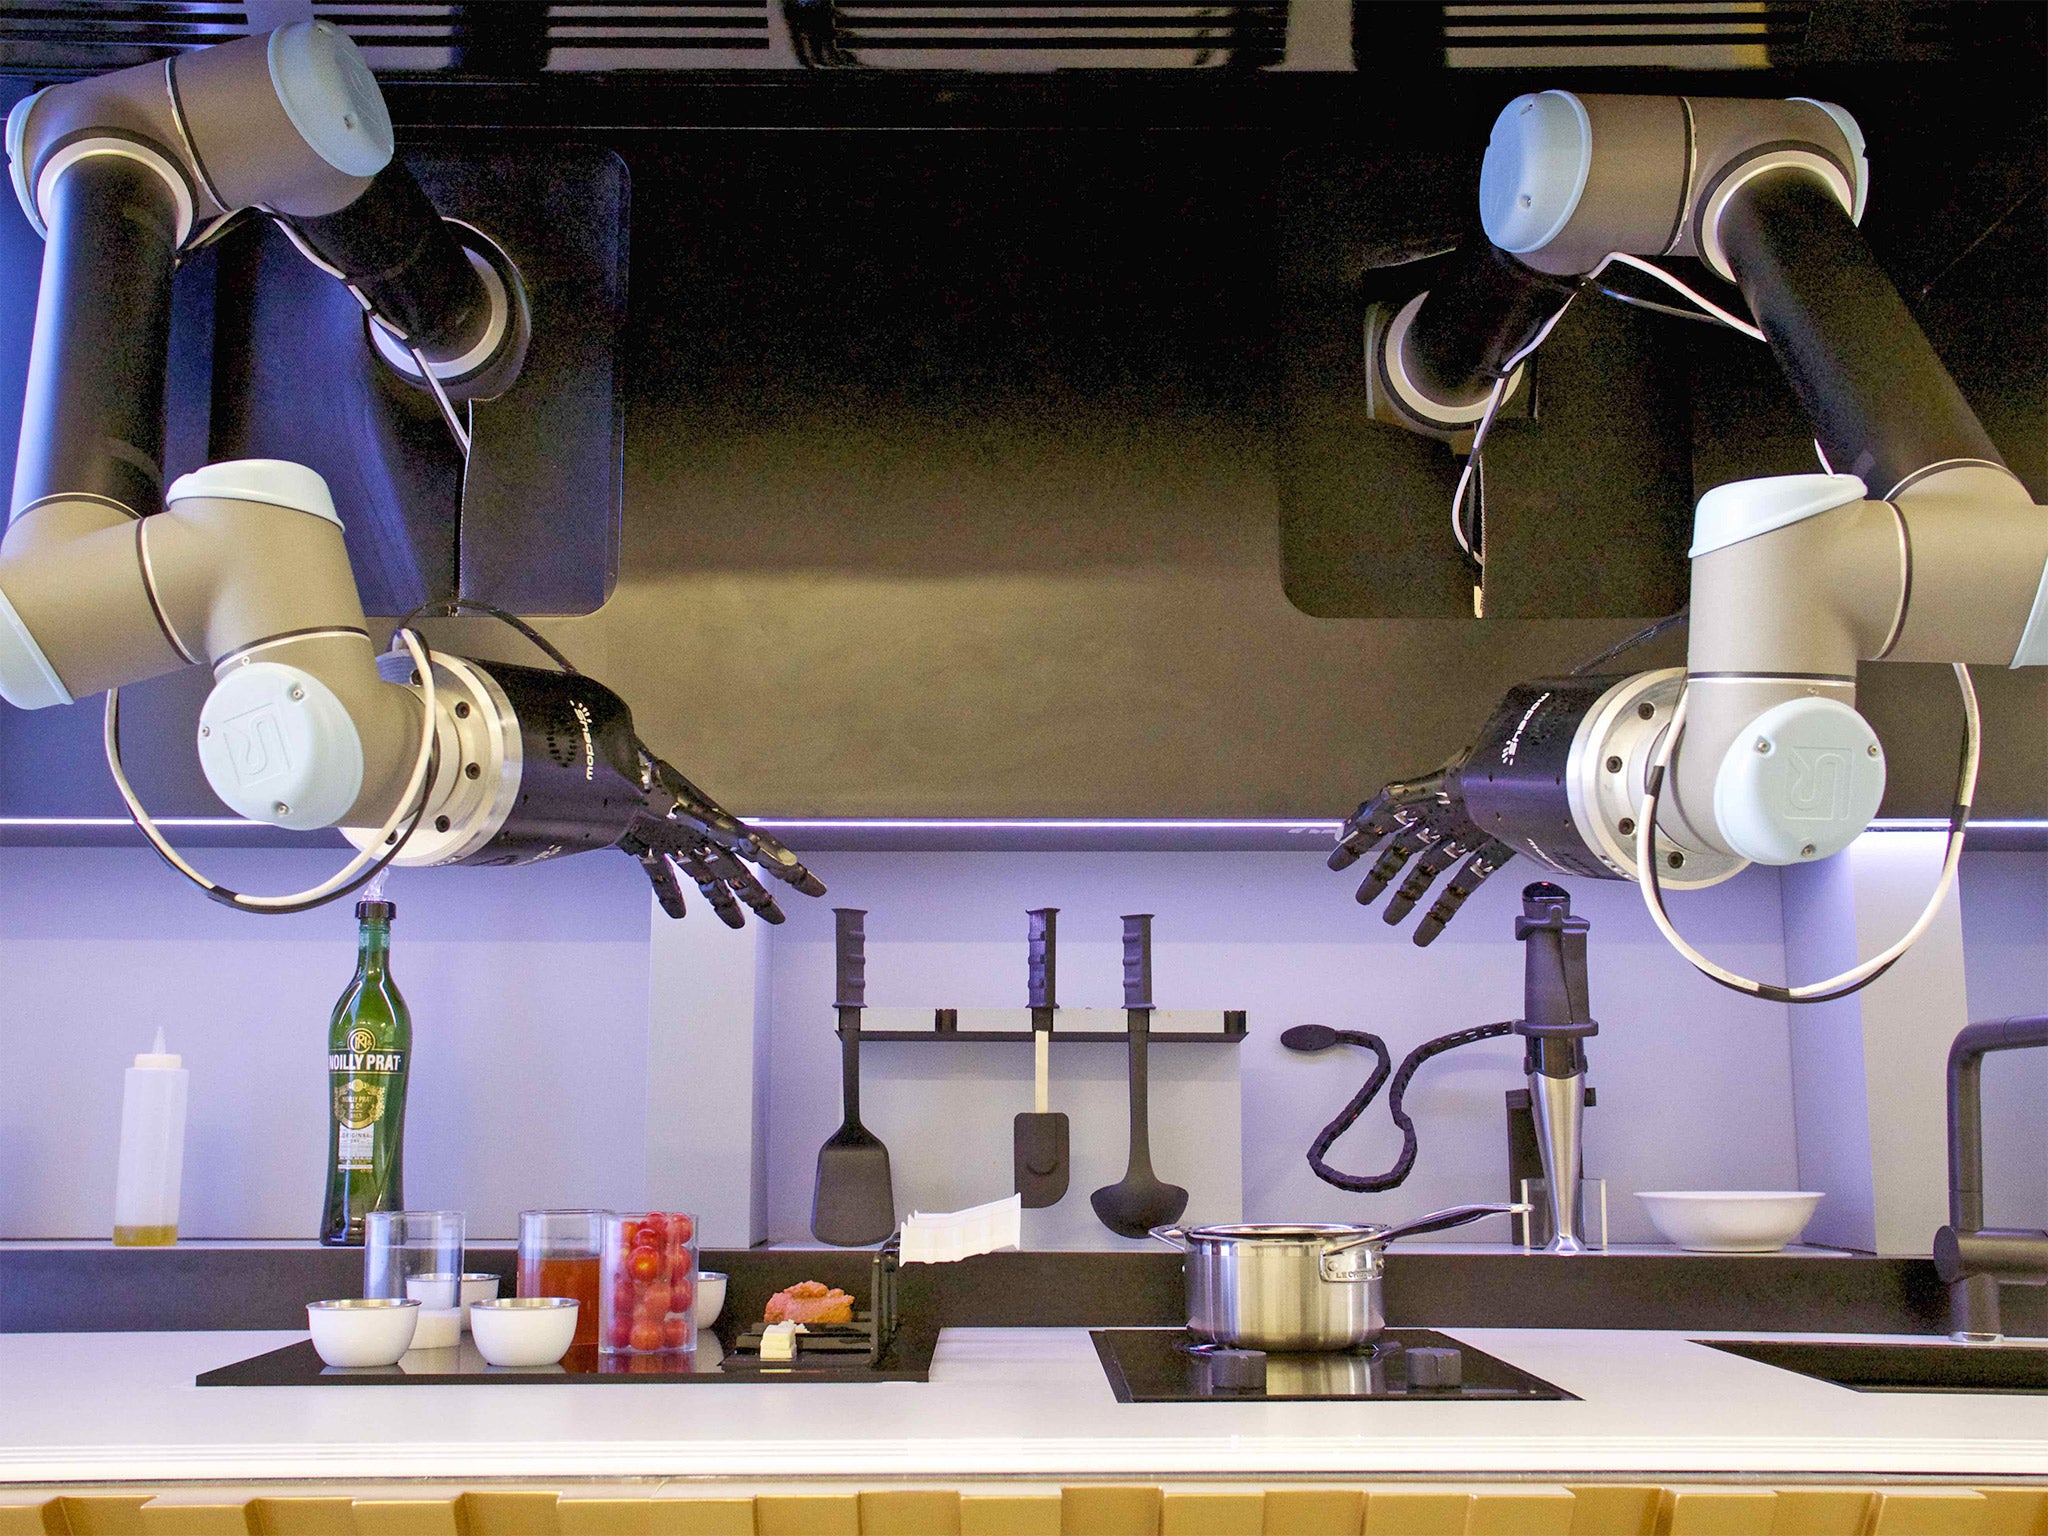 Helping hands: Moley Robotics’ automated kitchen